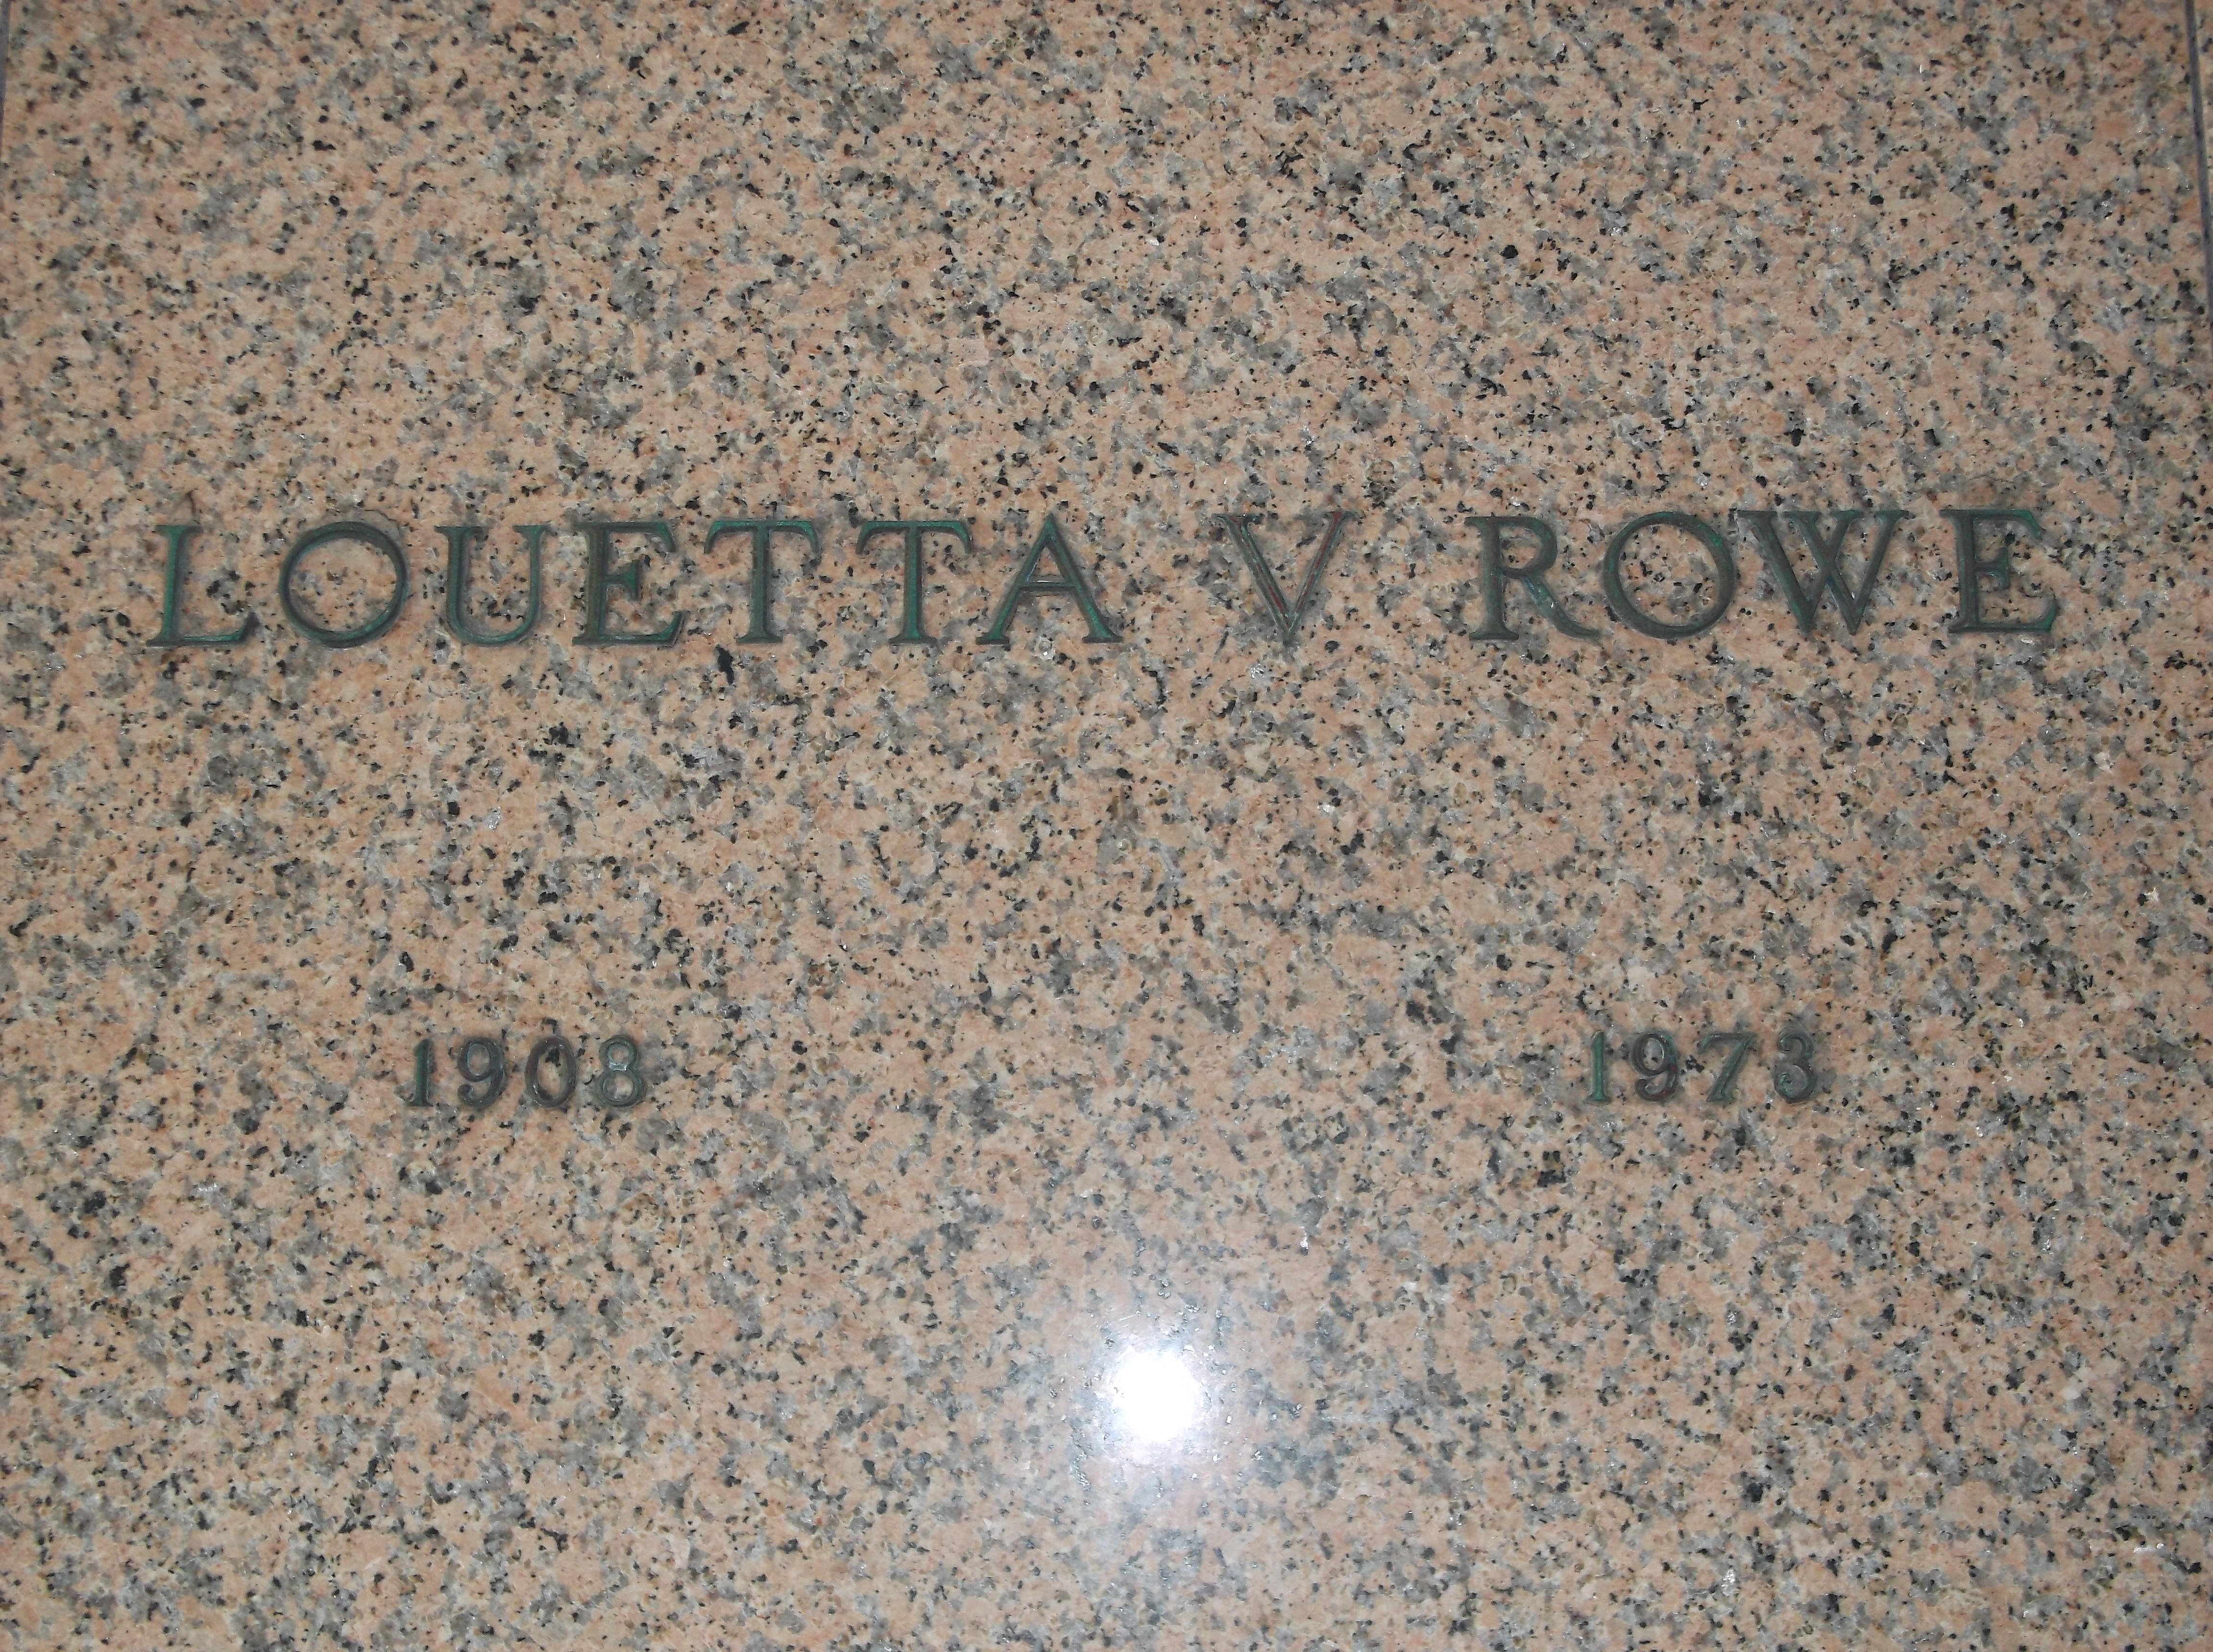 Louetta V Rowe